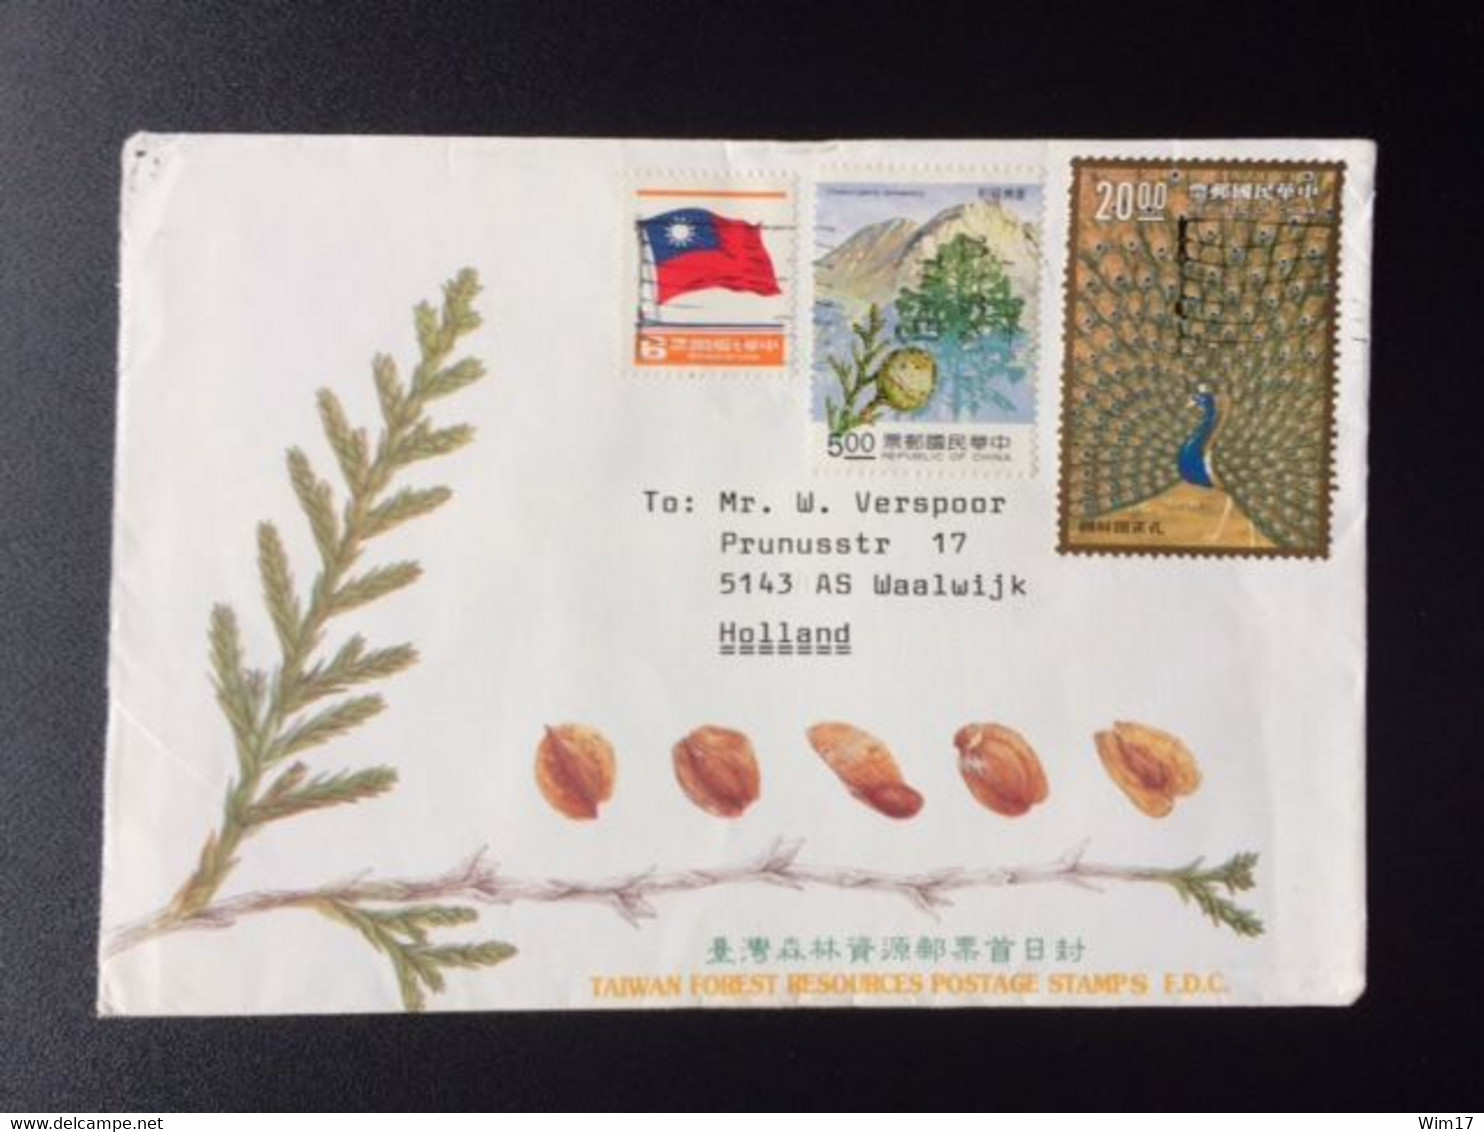 TAIWAN 1992 AIR MAIL LETTER PEACOCK - Enteros Postales